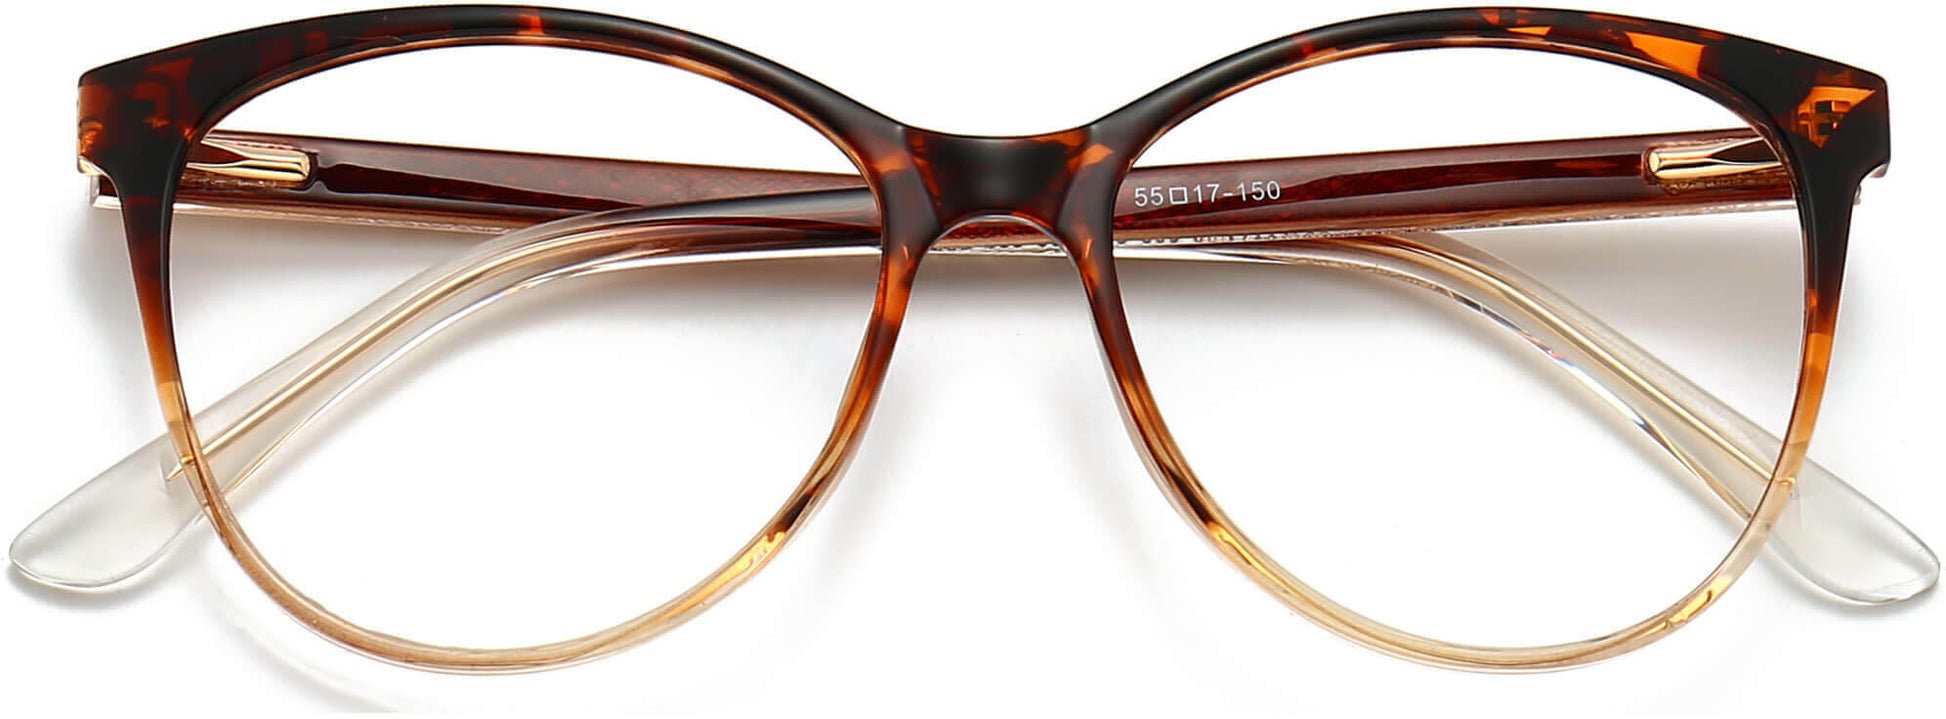 Everleigh Cateye Tortoise Eyeglasses from ANRRI, closed view